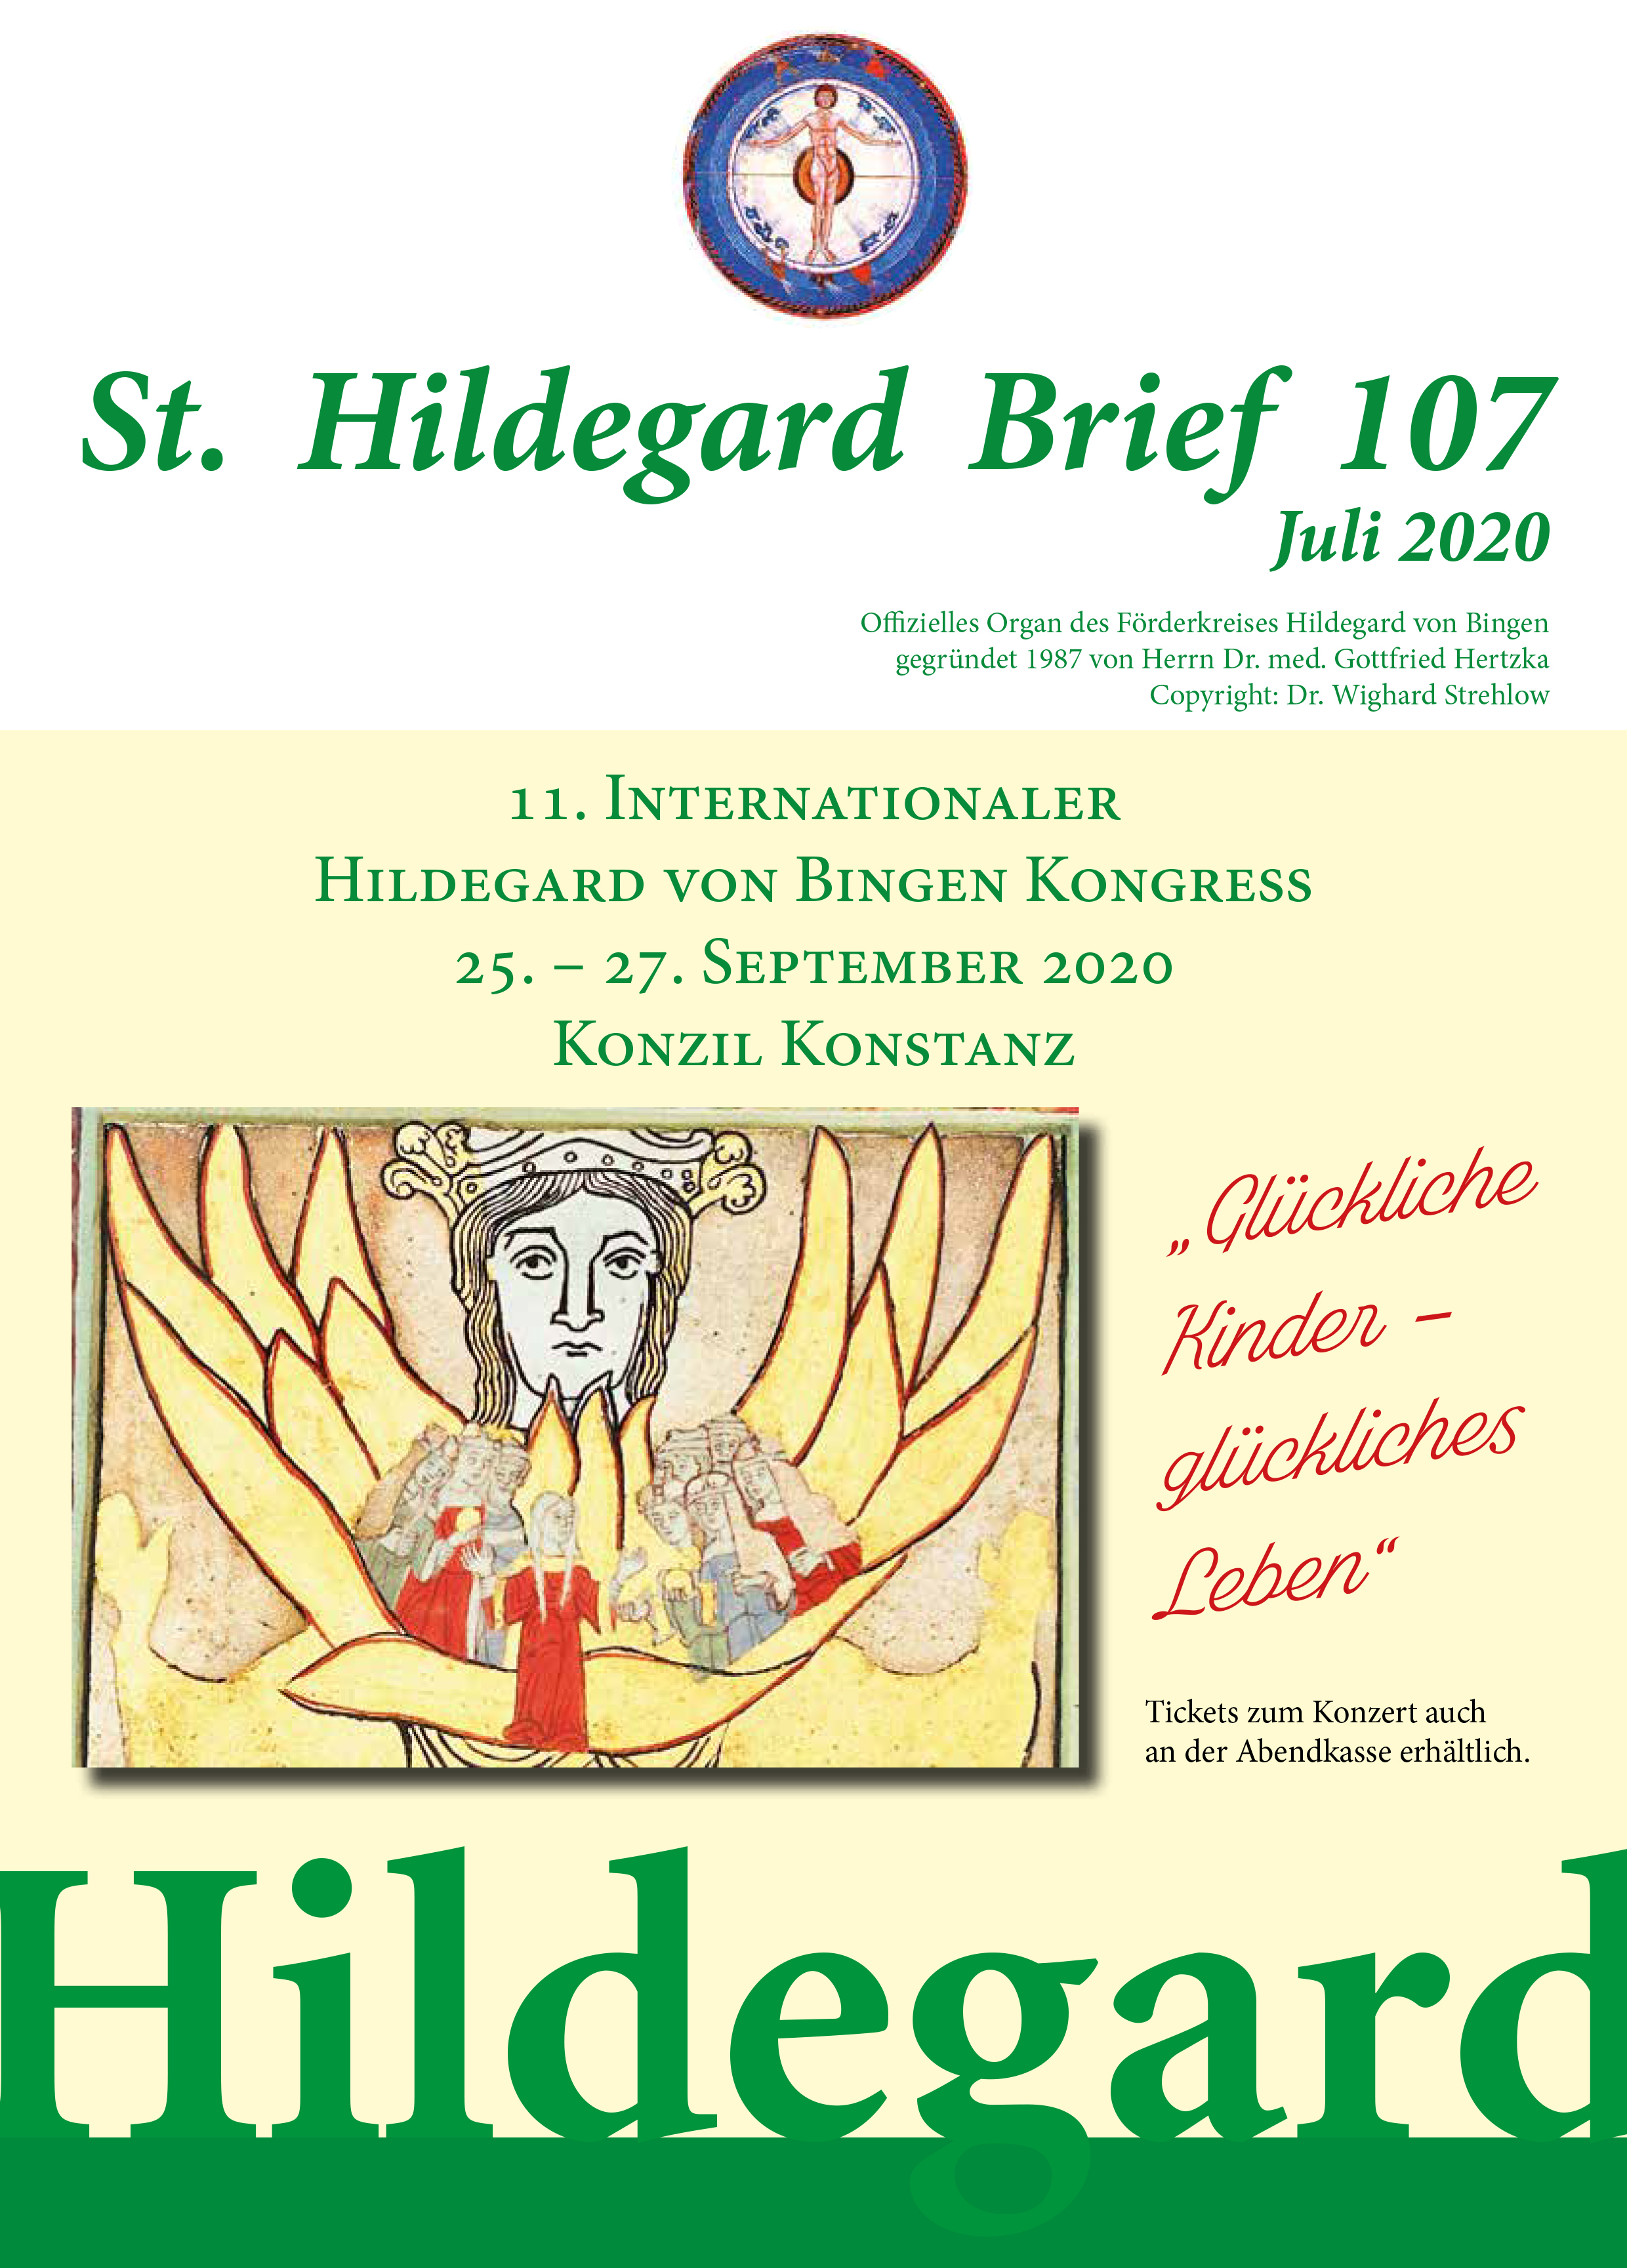 Hildegardbrief Nr. 107 web 1